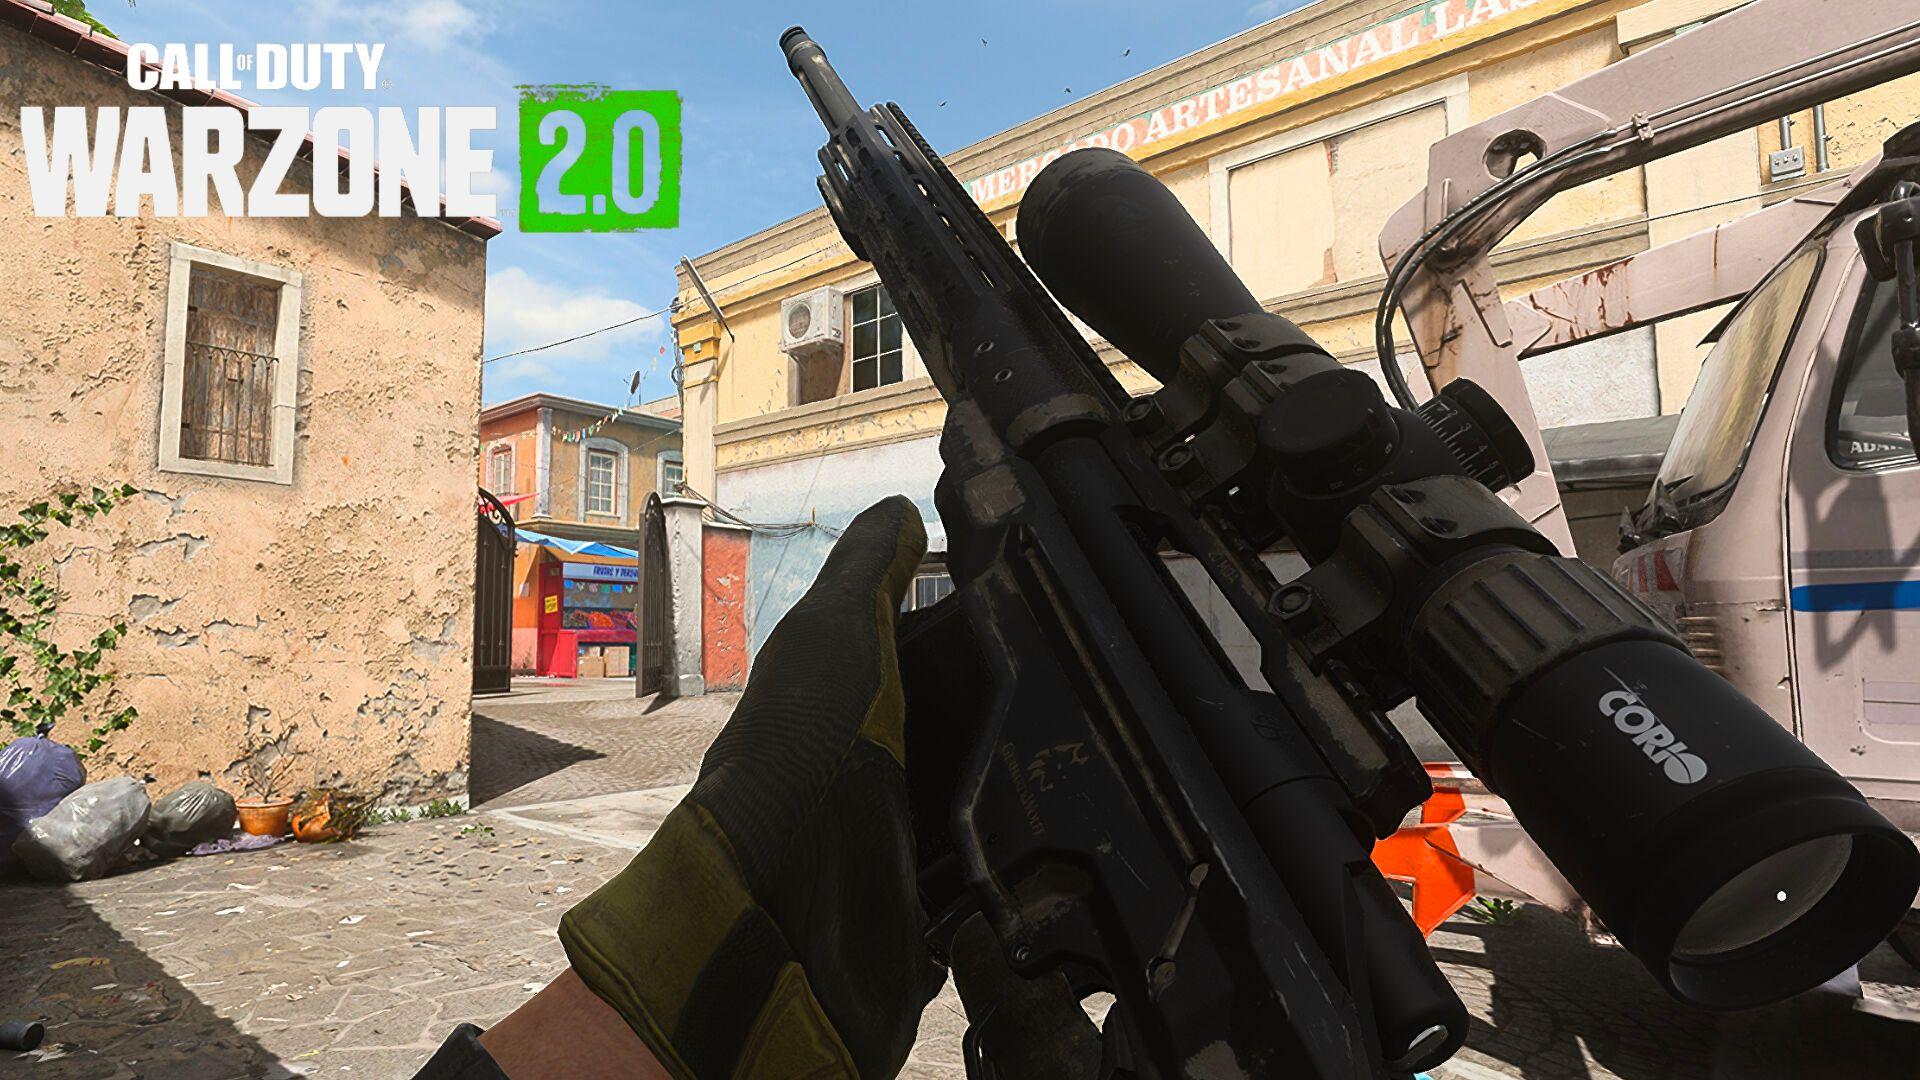 SP-X 80 sniper being held aloft in Call of Duty: Modern Warfare 2